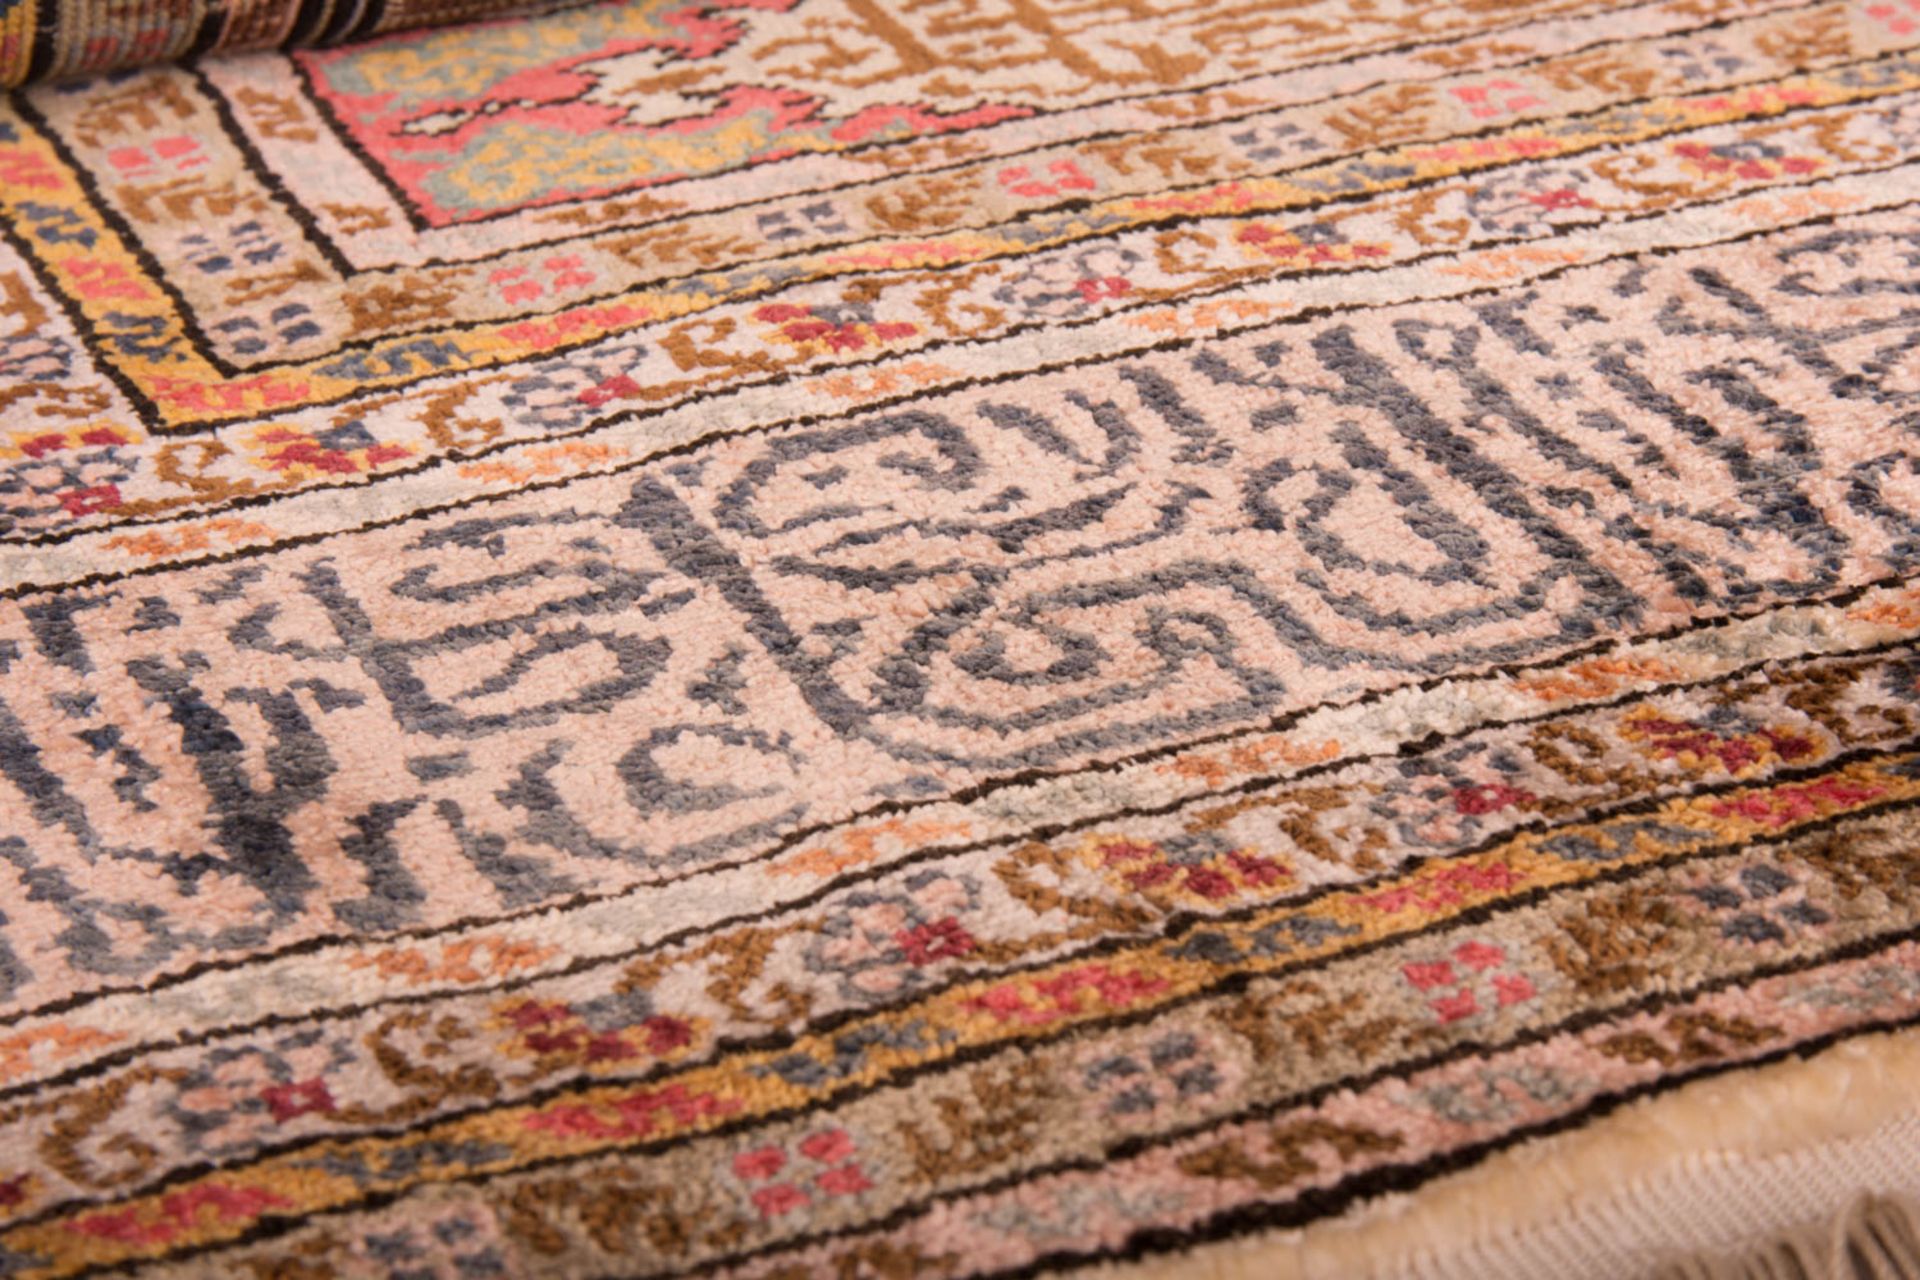 Fine Kayseri prayer rug, silk, Turkey, 20th c. - Image 3 of 5